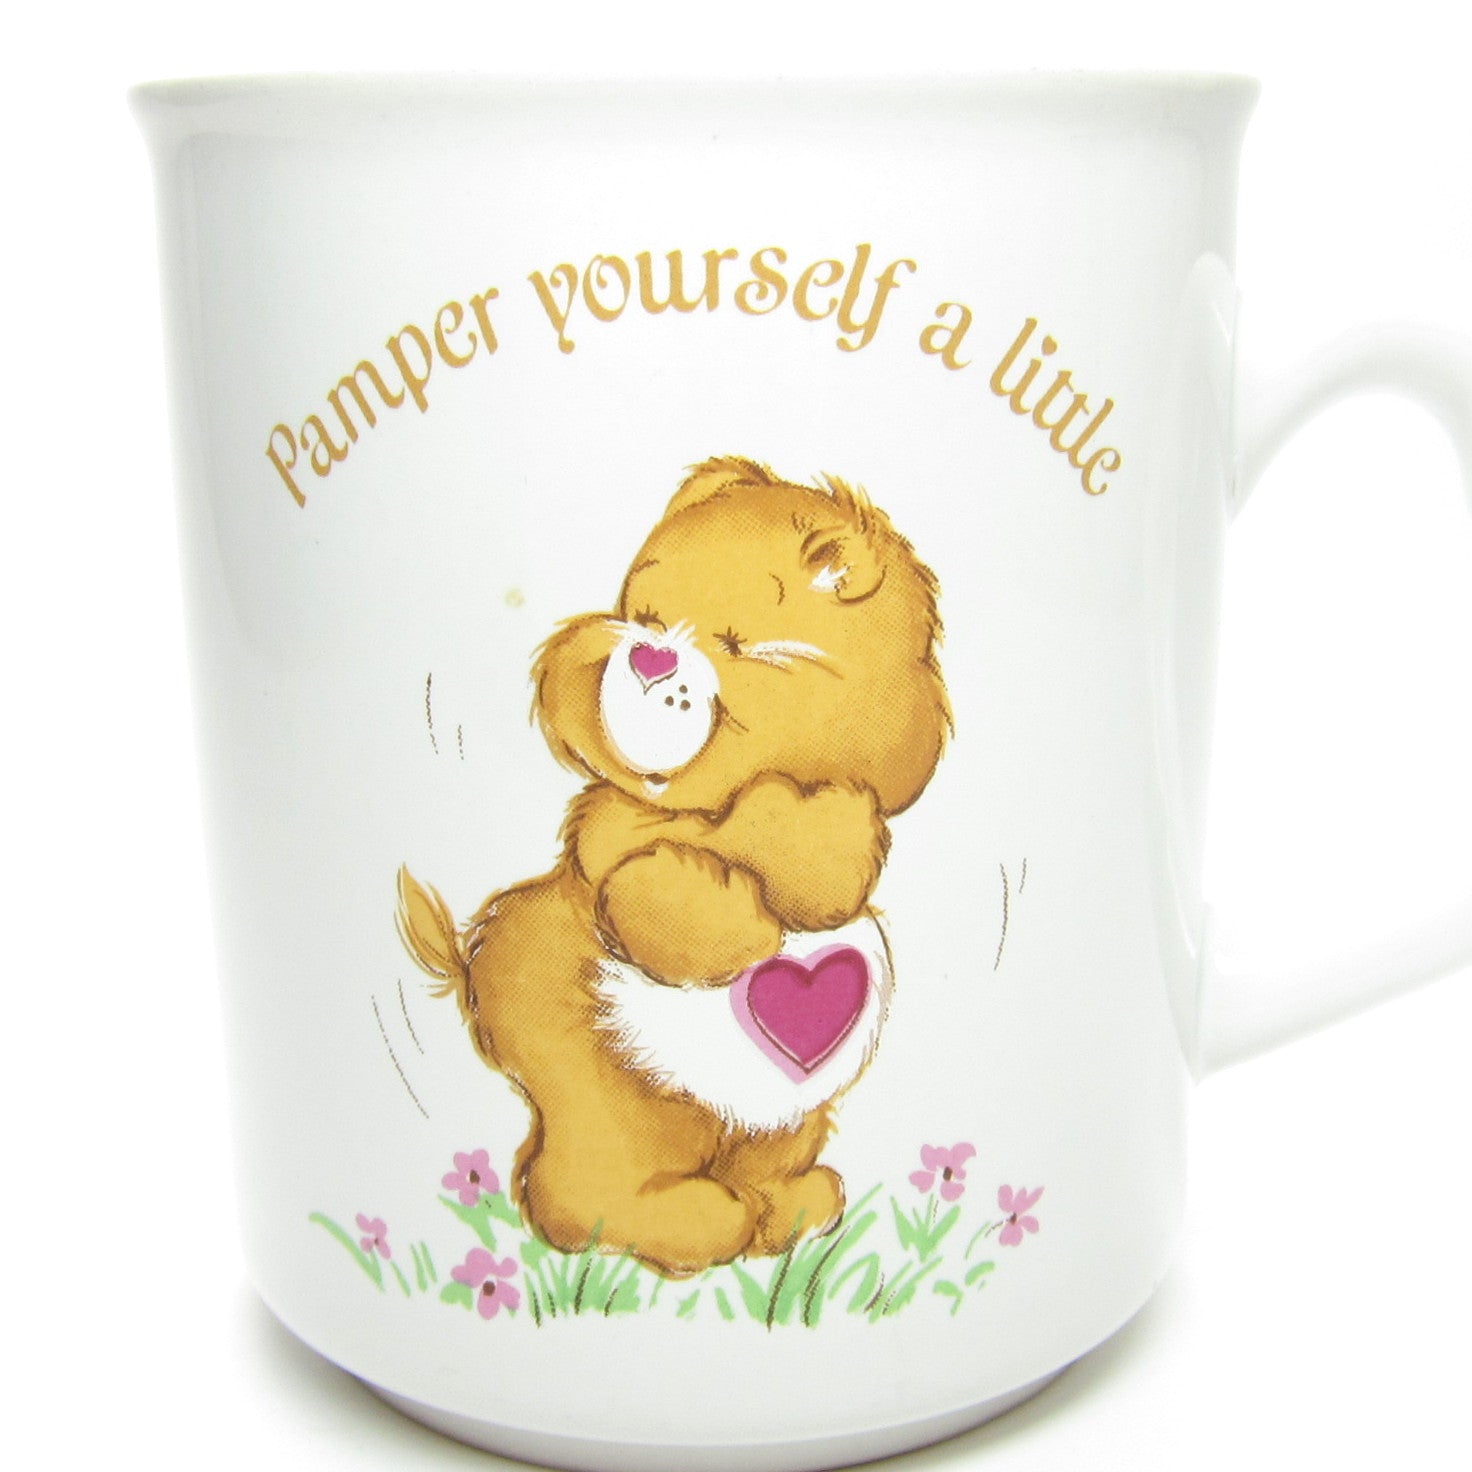 Care Bears Mug Tenderheart Bear Cup Pamper Yourself a Little